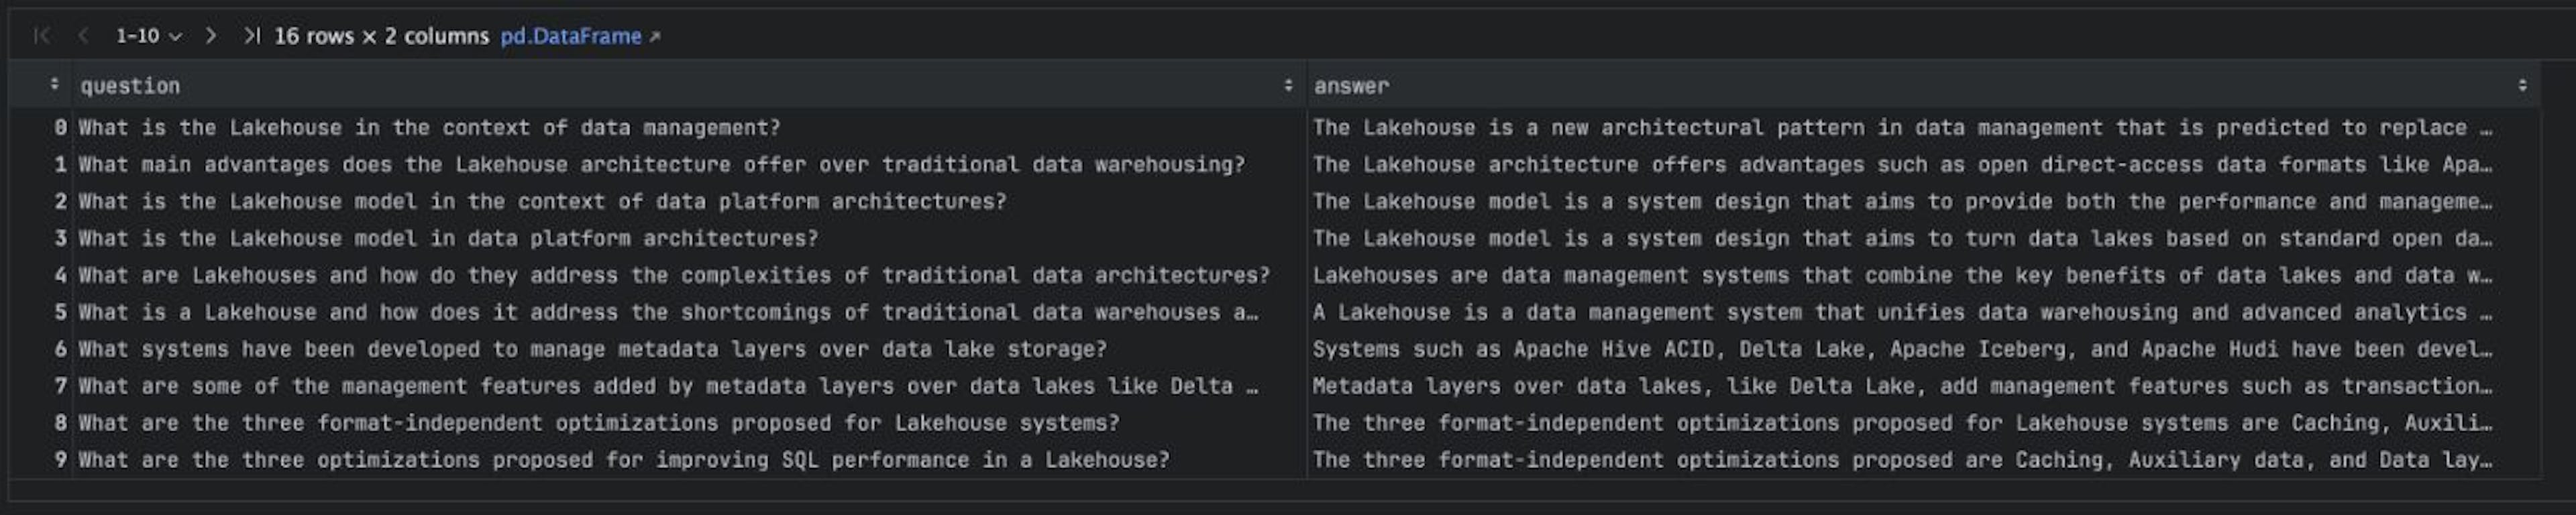 "Lakehouse: 데이터 웨어하우징과 고급 분석을 통합하는 차세대 개방형 플랫폼" 논문의 QA 코퍼스를 종합했습니다.